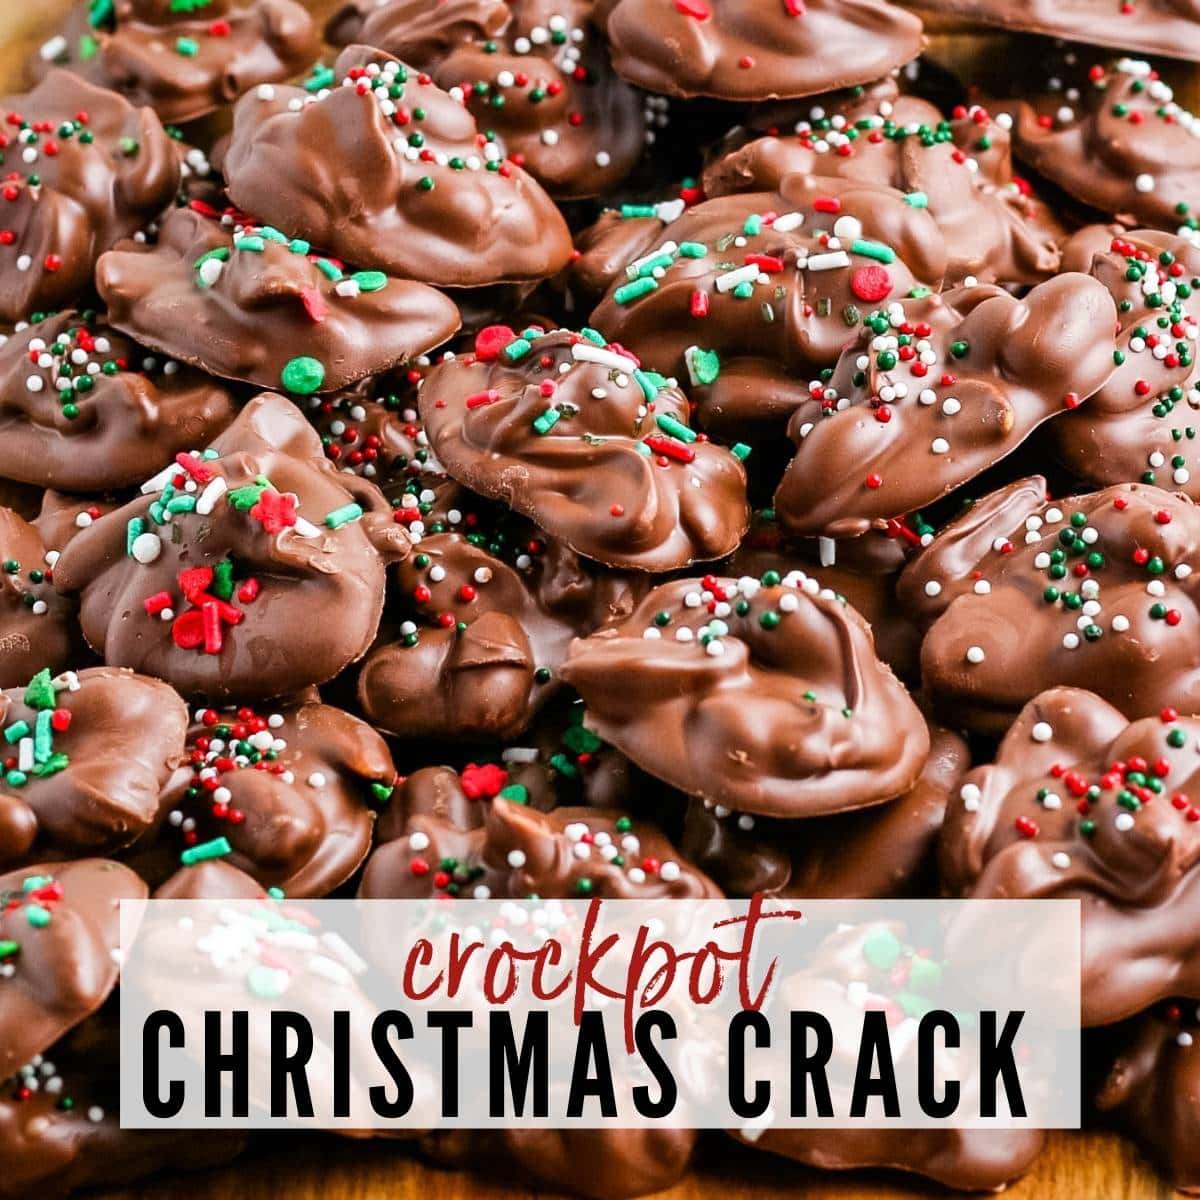 https://www.areinventedmom.com/wp-content/uploads/2020/11/Crockpot-Christmas-Crack-Feat.jpg